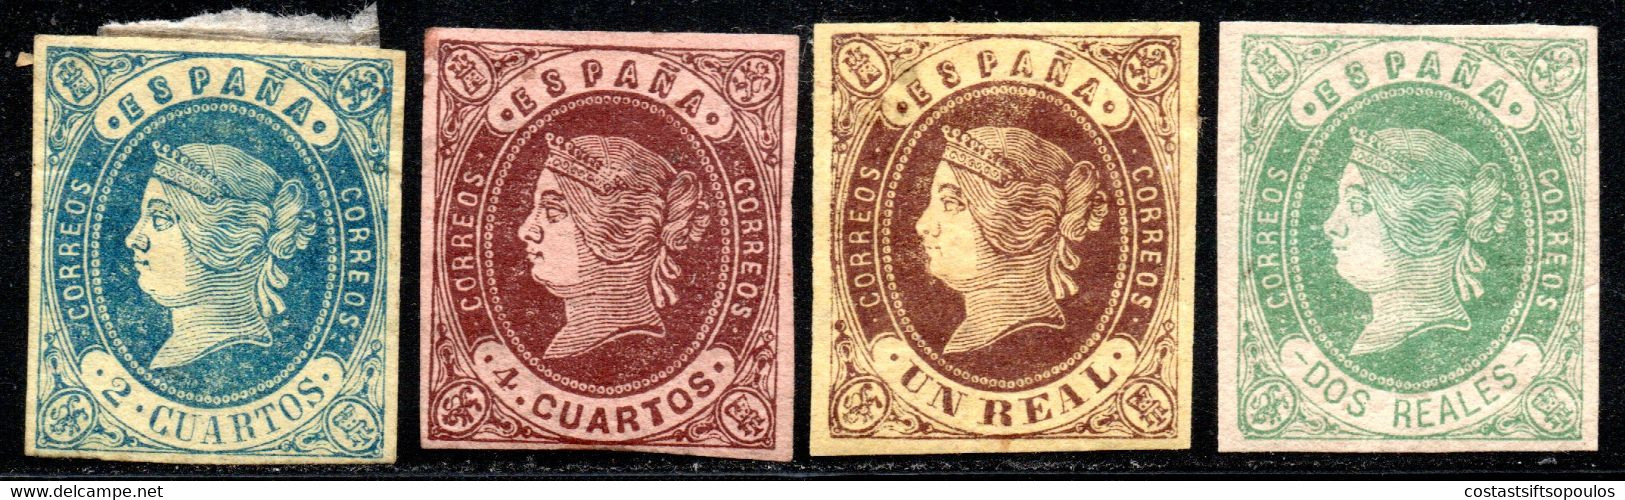 985.SPAIN.1862 ISABELLA II SC.55,56,59,60 MH - Unused Stamps